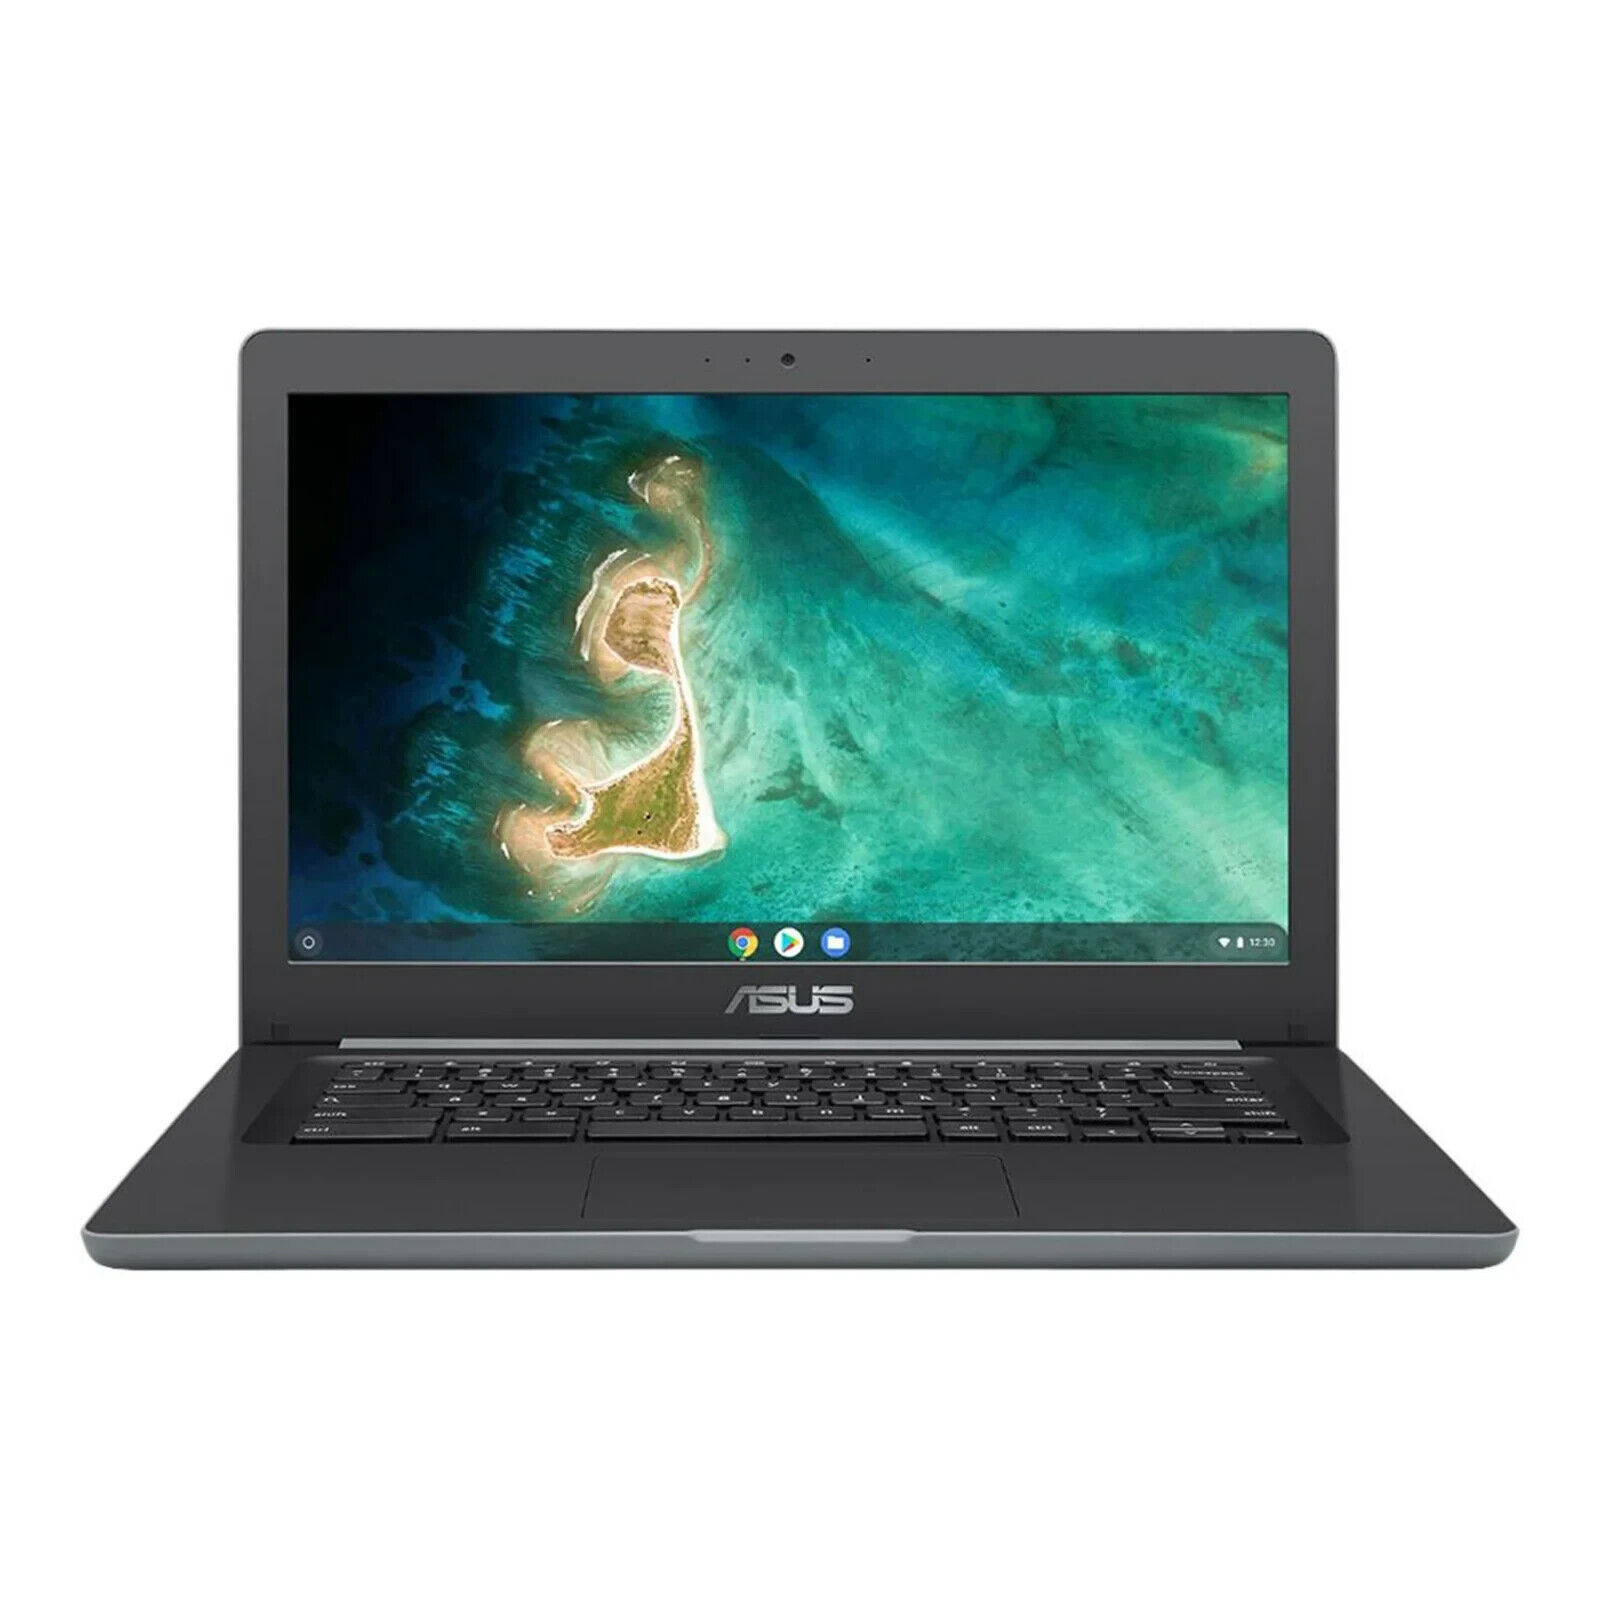 ASUS Chromebook C204EE 11.6 inch 16GB, Intel Celeron N., 1.10GHz, 4GB